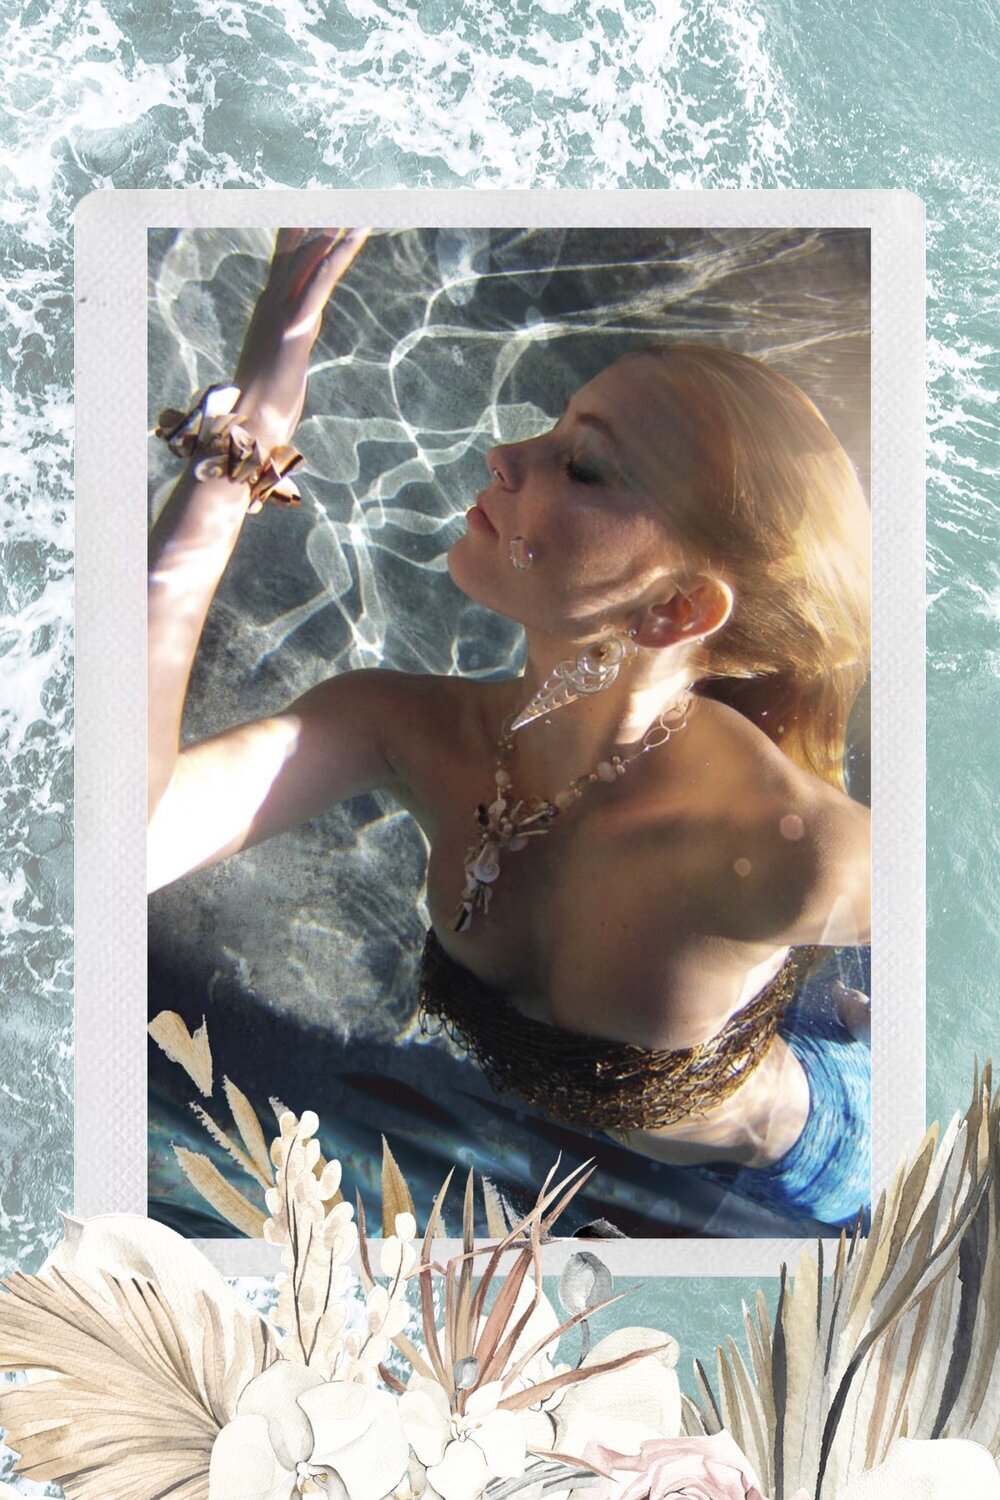 mermaid model wearing seashell jewelry